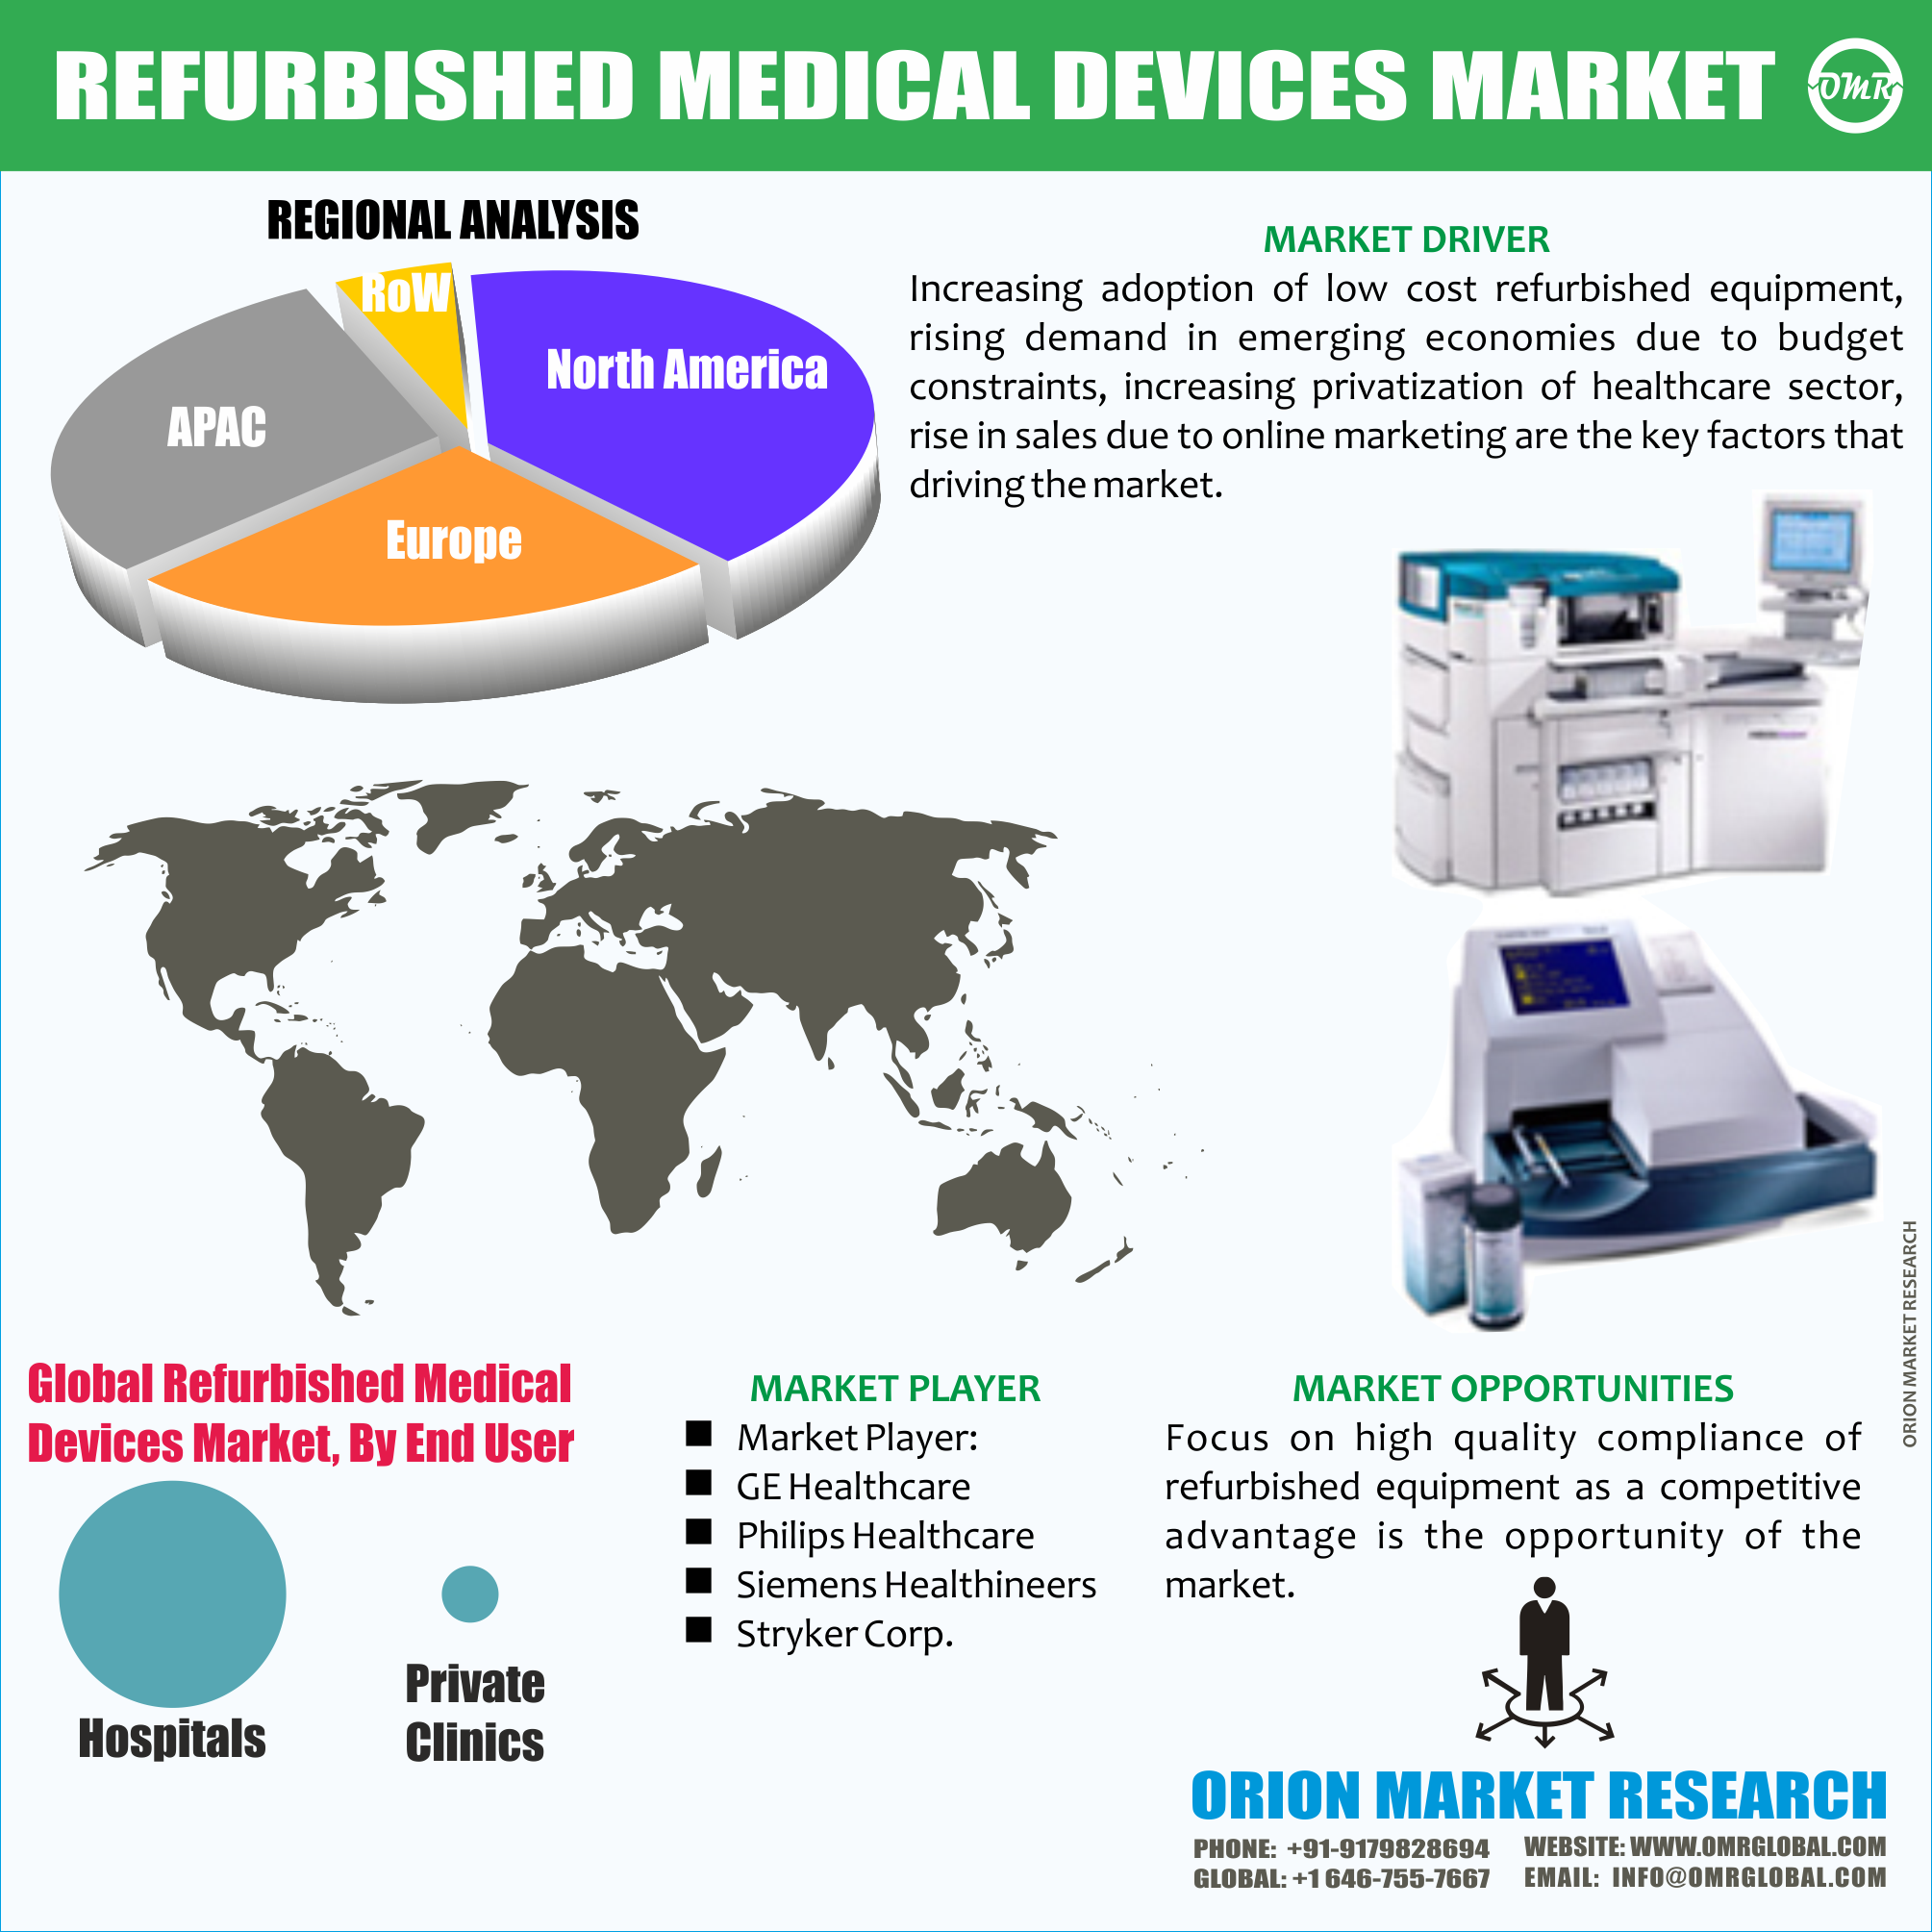 GLOBAL REFURBISHED MEDICAL DEVICES MARKET BY OMR